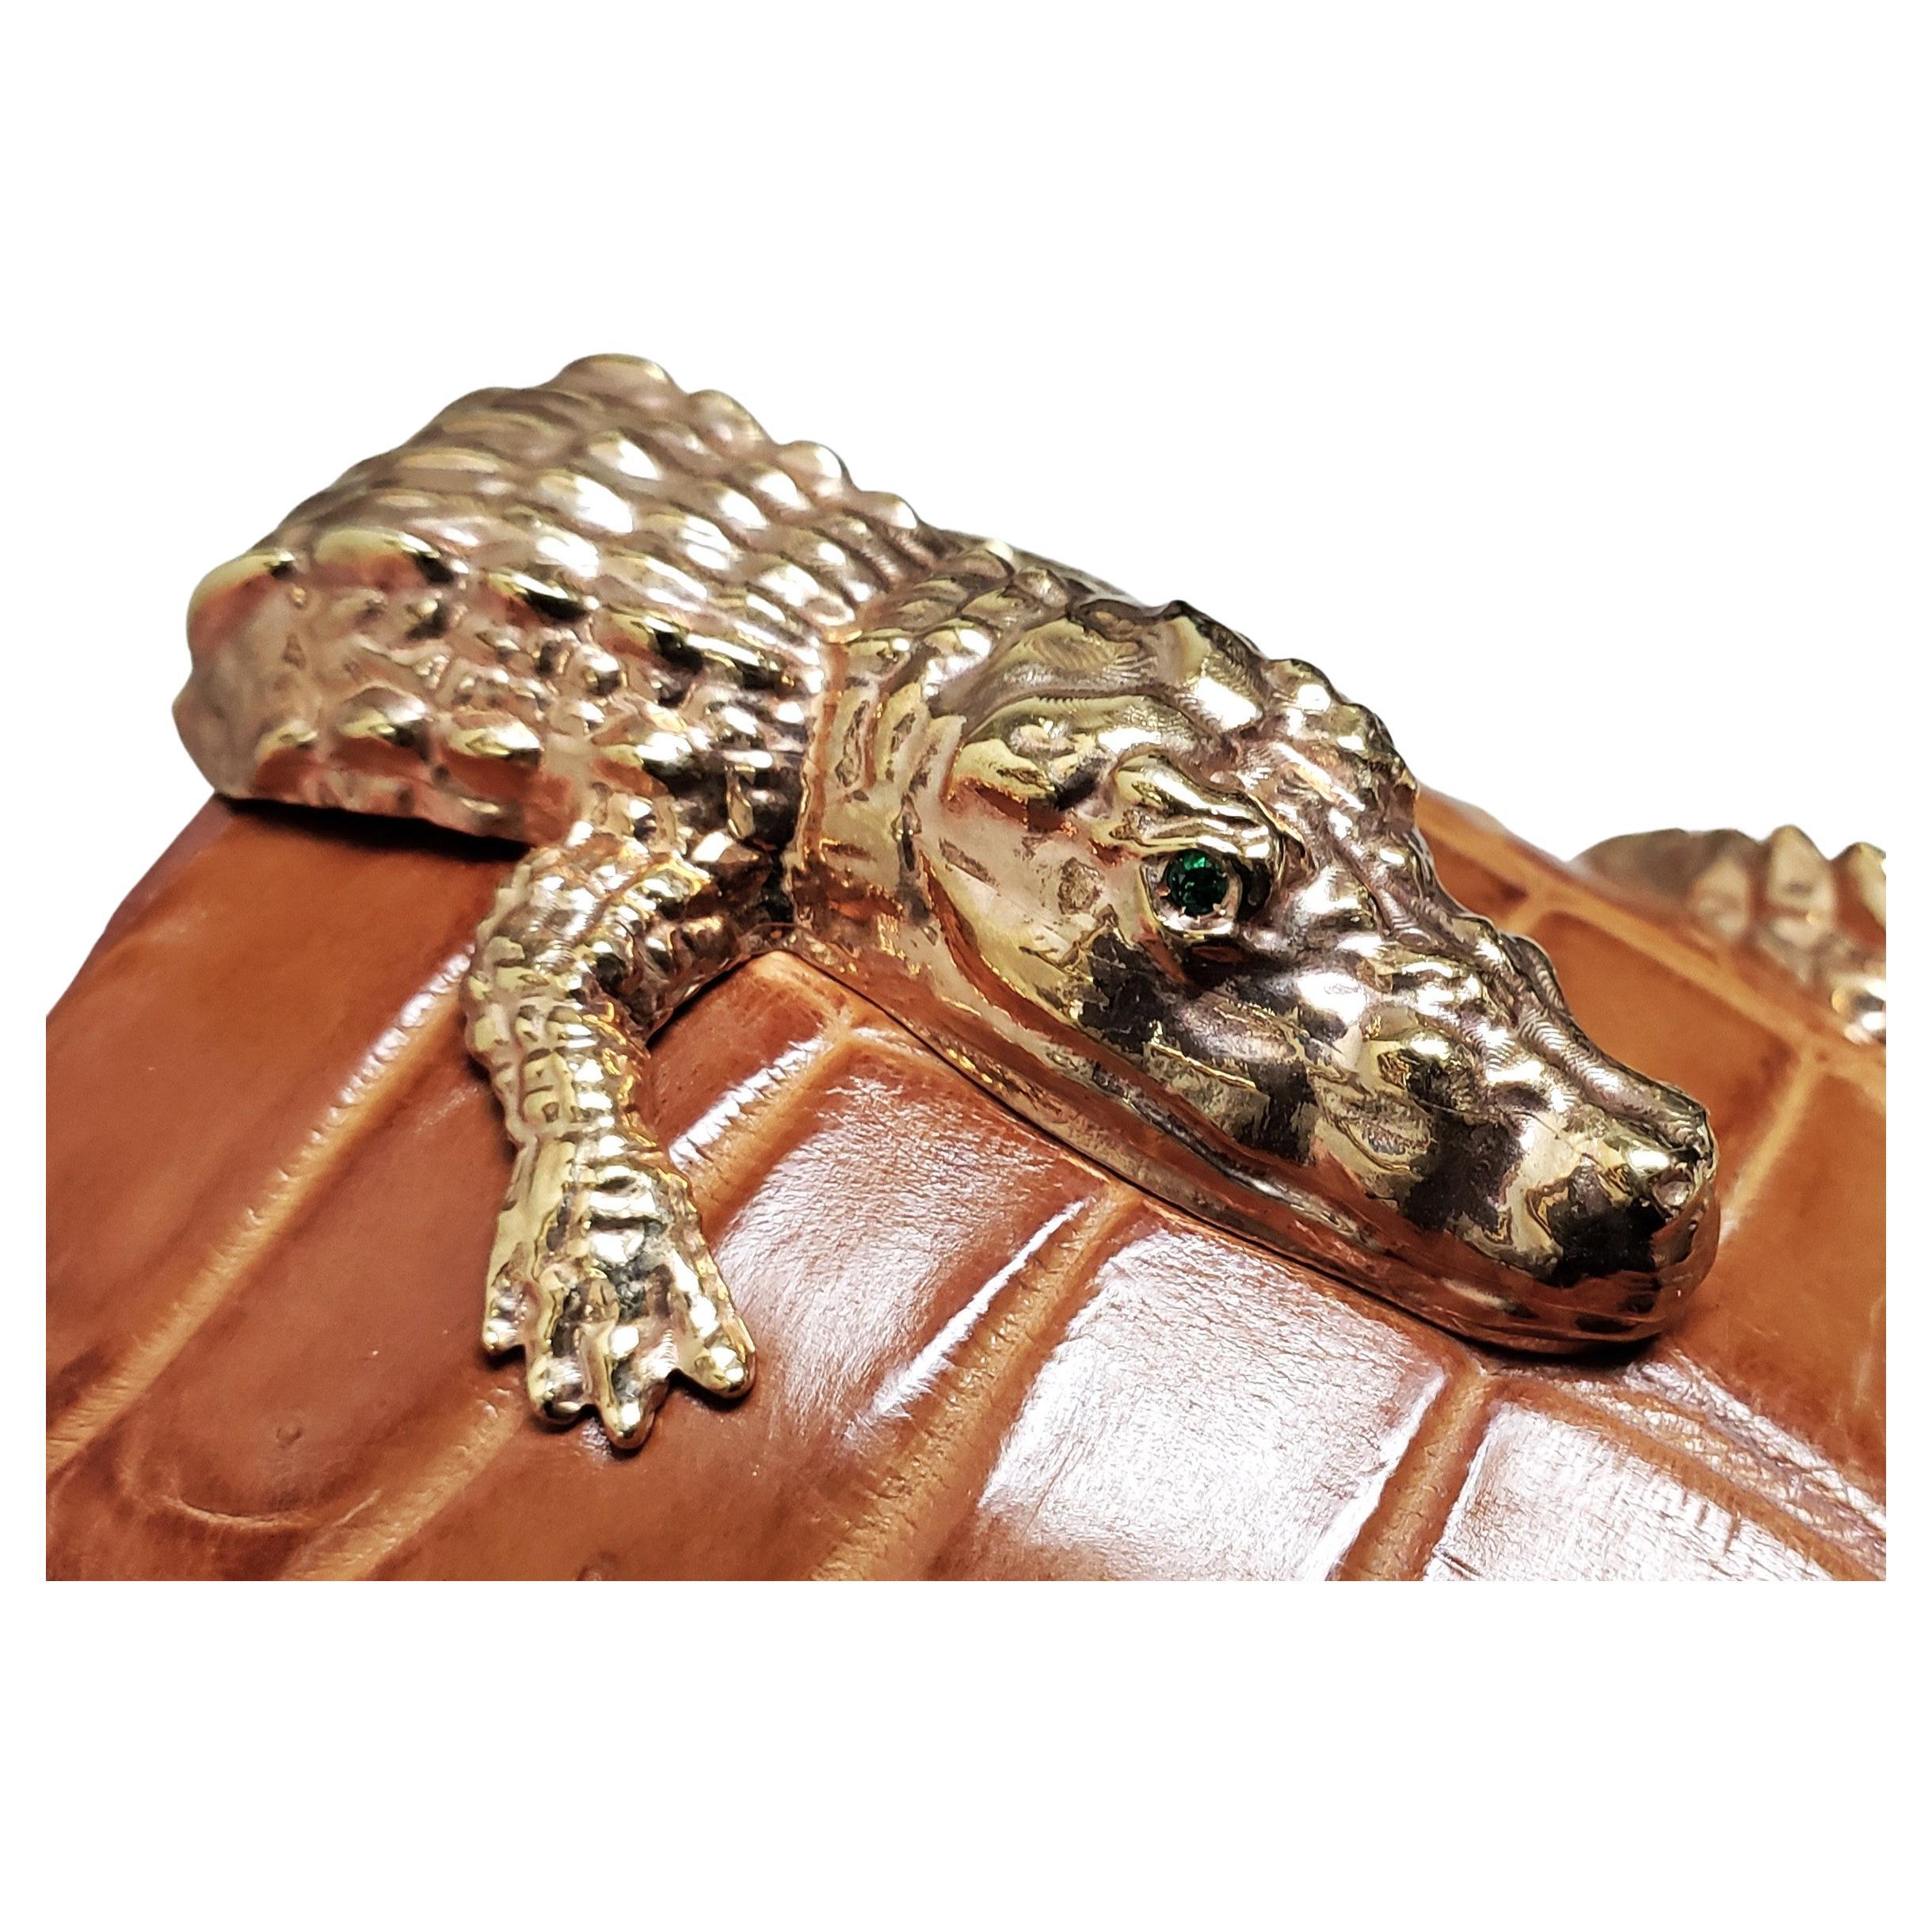 SABBADINI Italy 18K Rose Gold Alligator cuff bracelet 3.25" wide